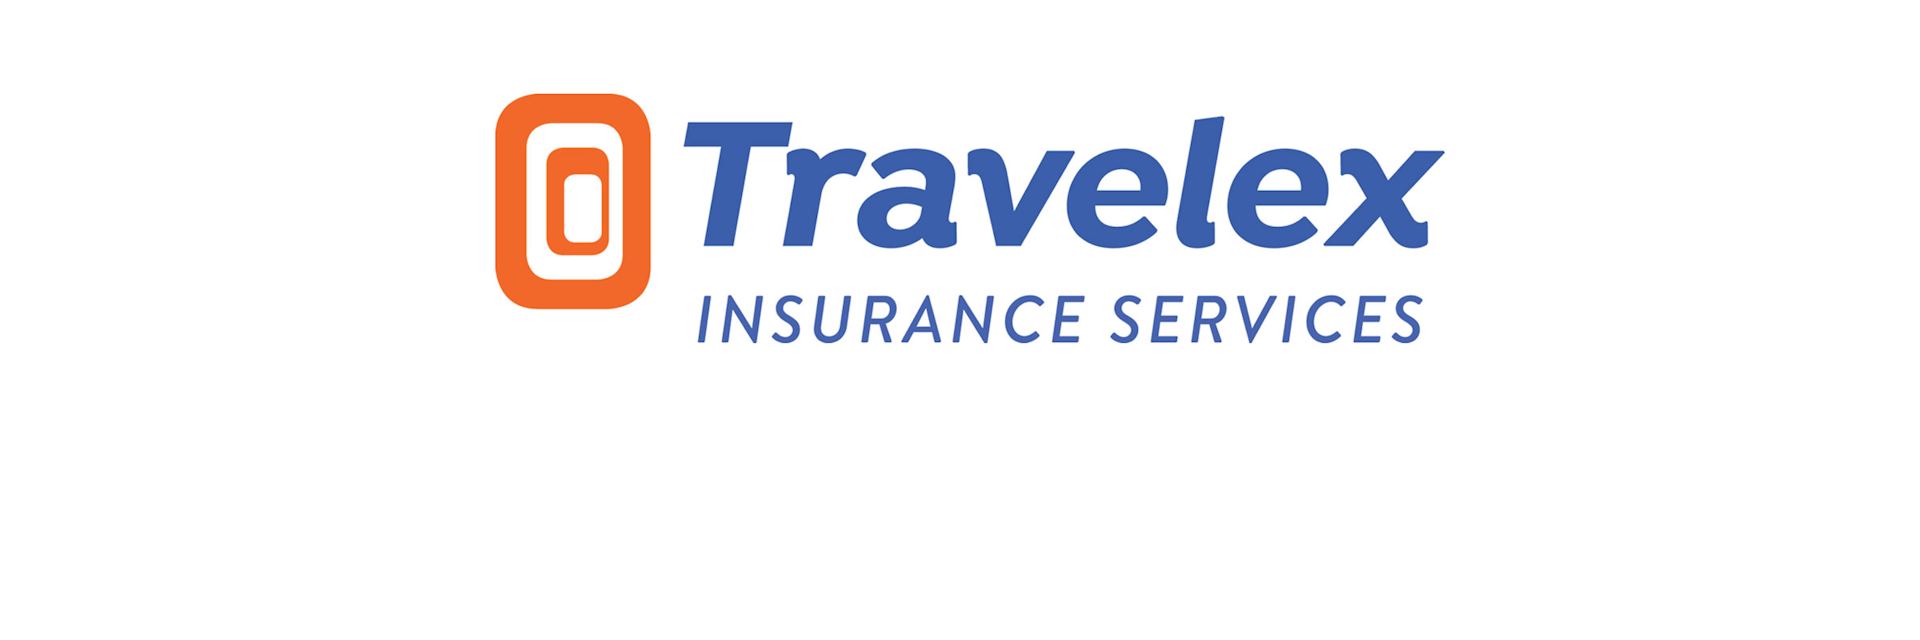 travel select insurance travelex